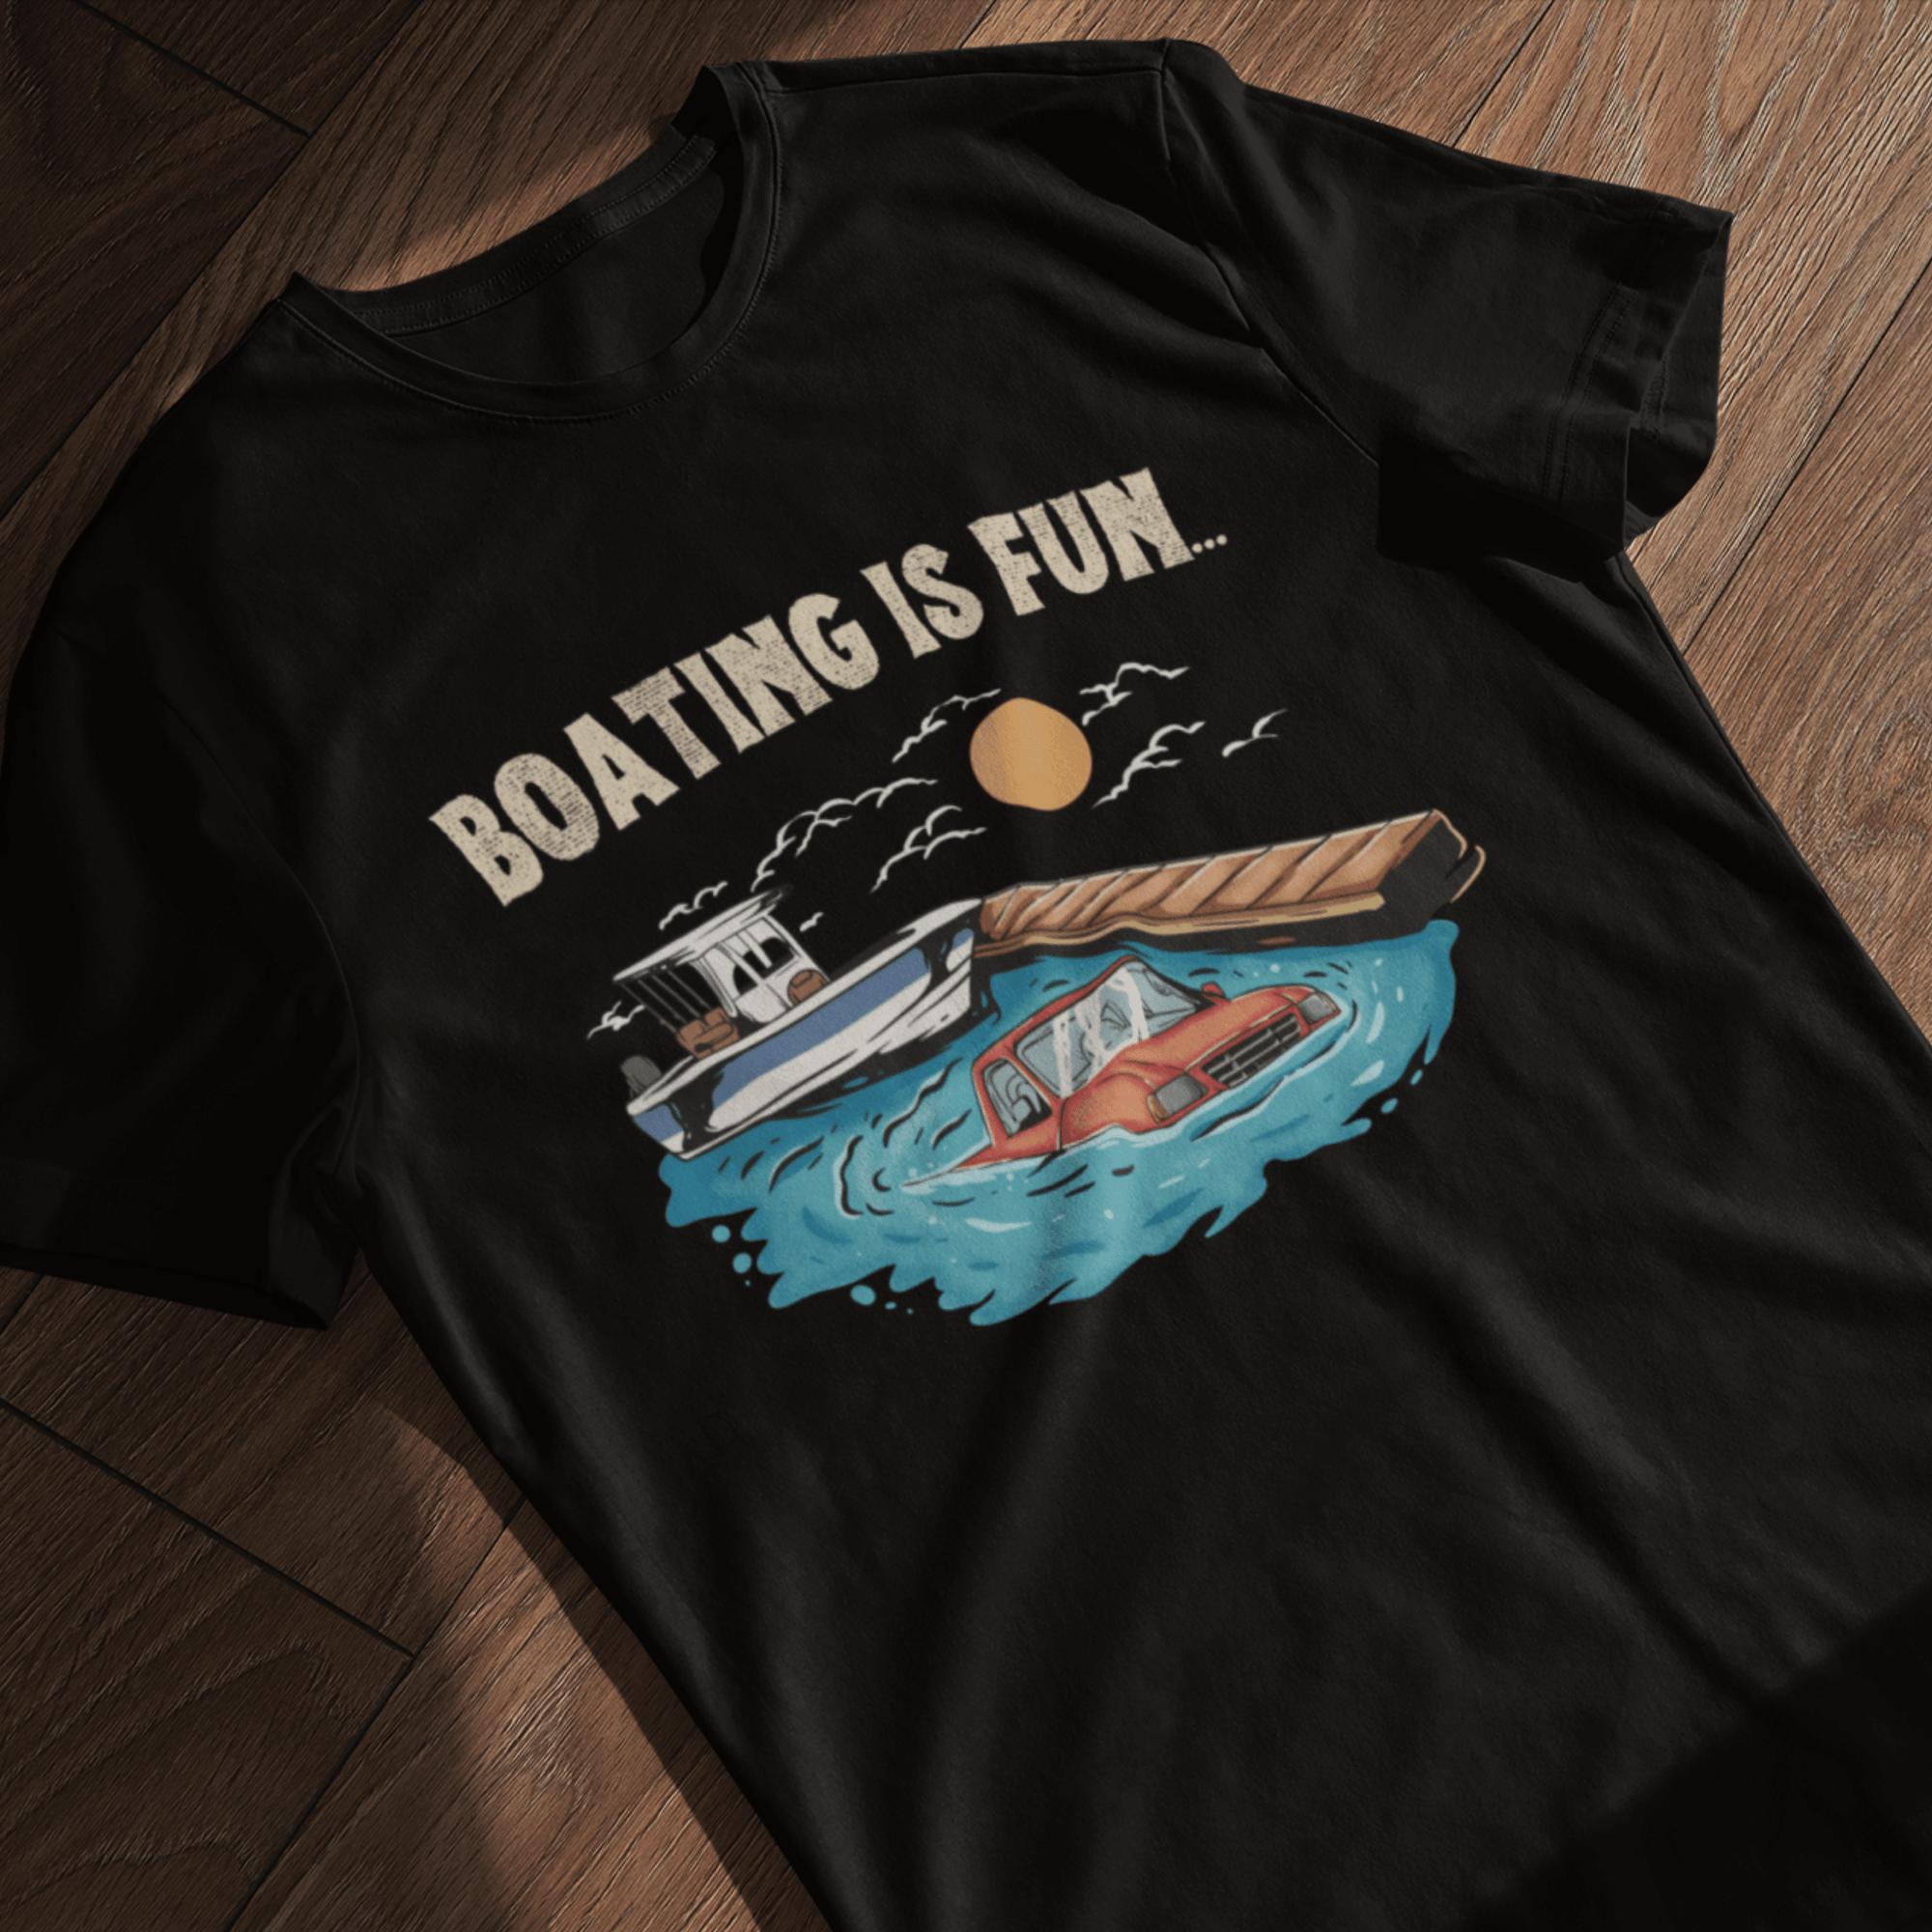 Boating Is Fun...Boat Ramp Fail T-Shirt